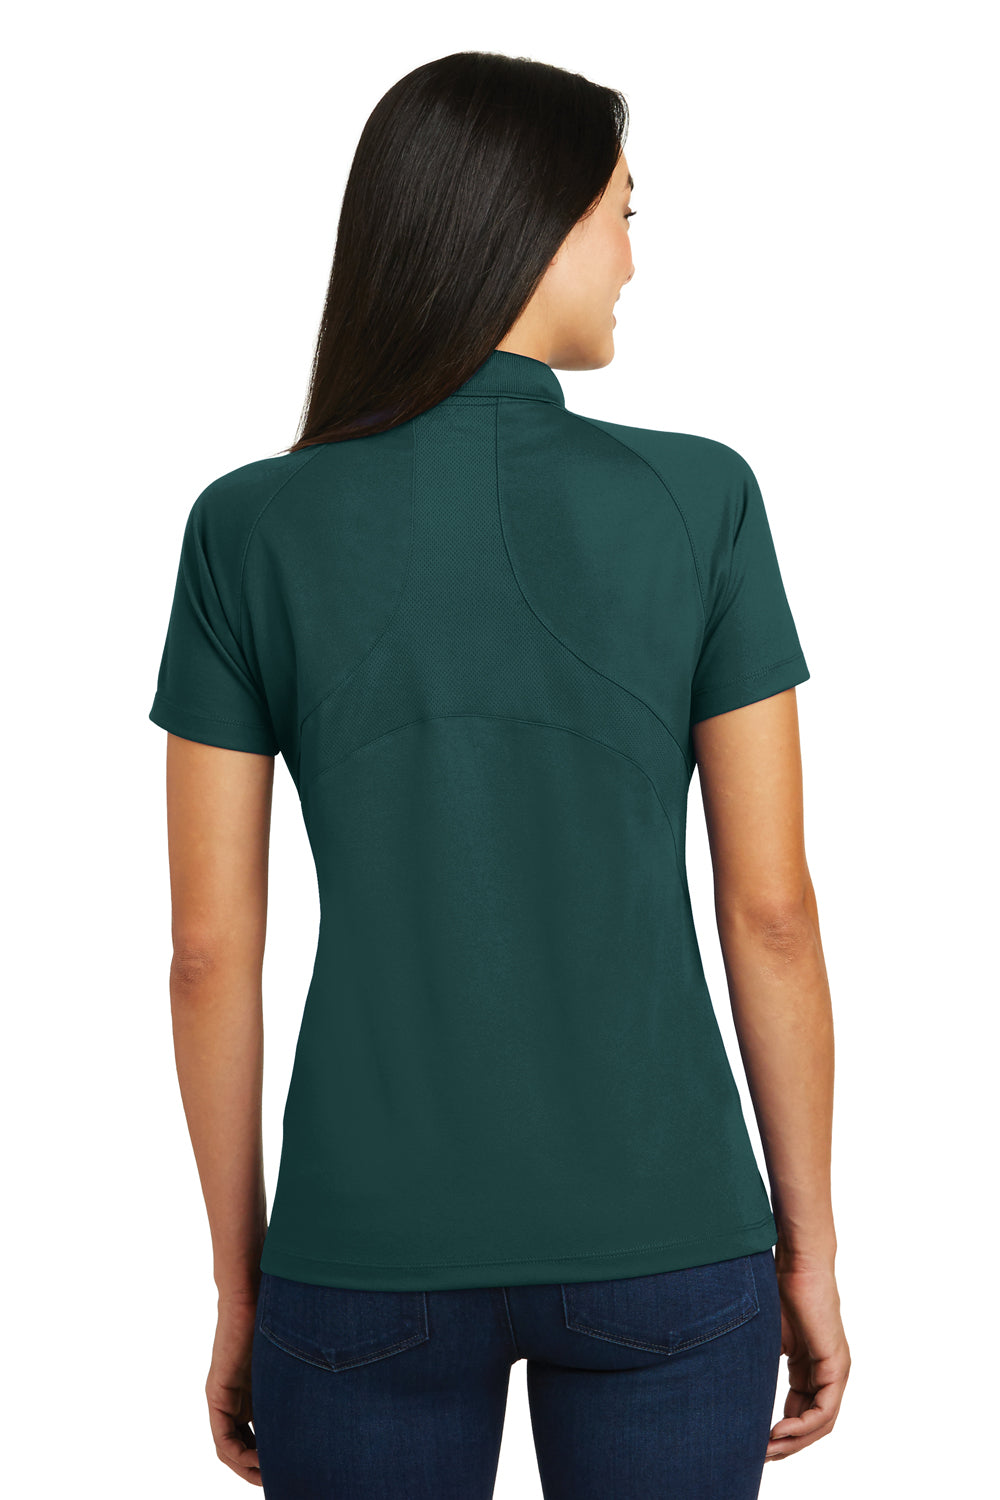 Sport-Tek L474 Womens Dri-Mesh Moisture Wicking Short Sleeve Polo Shirt Forest Green Back